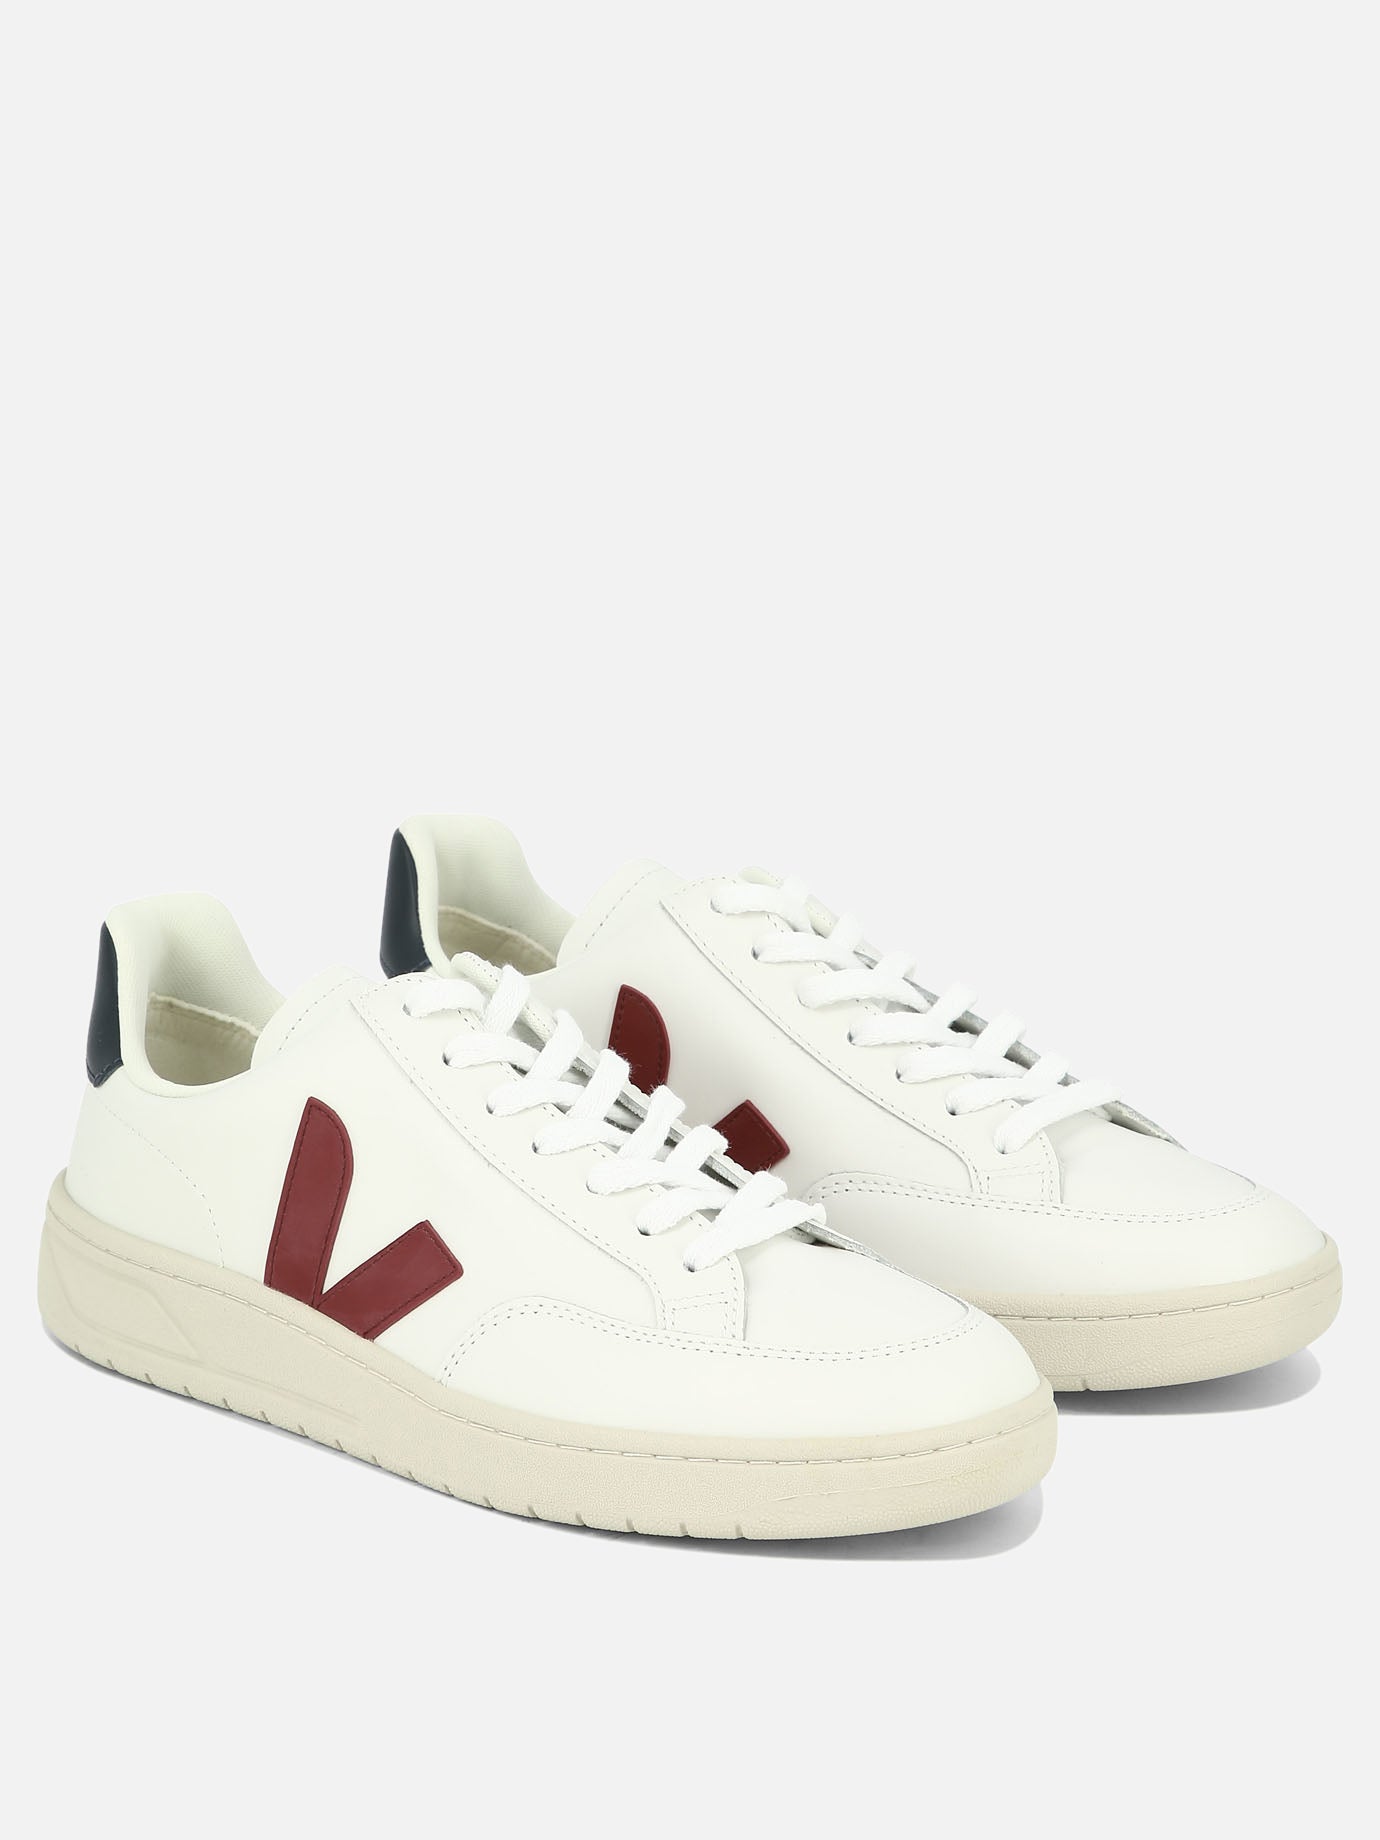 "V-12" sneakers